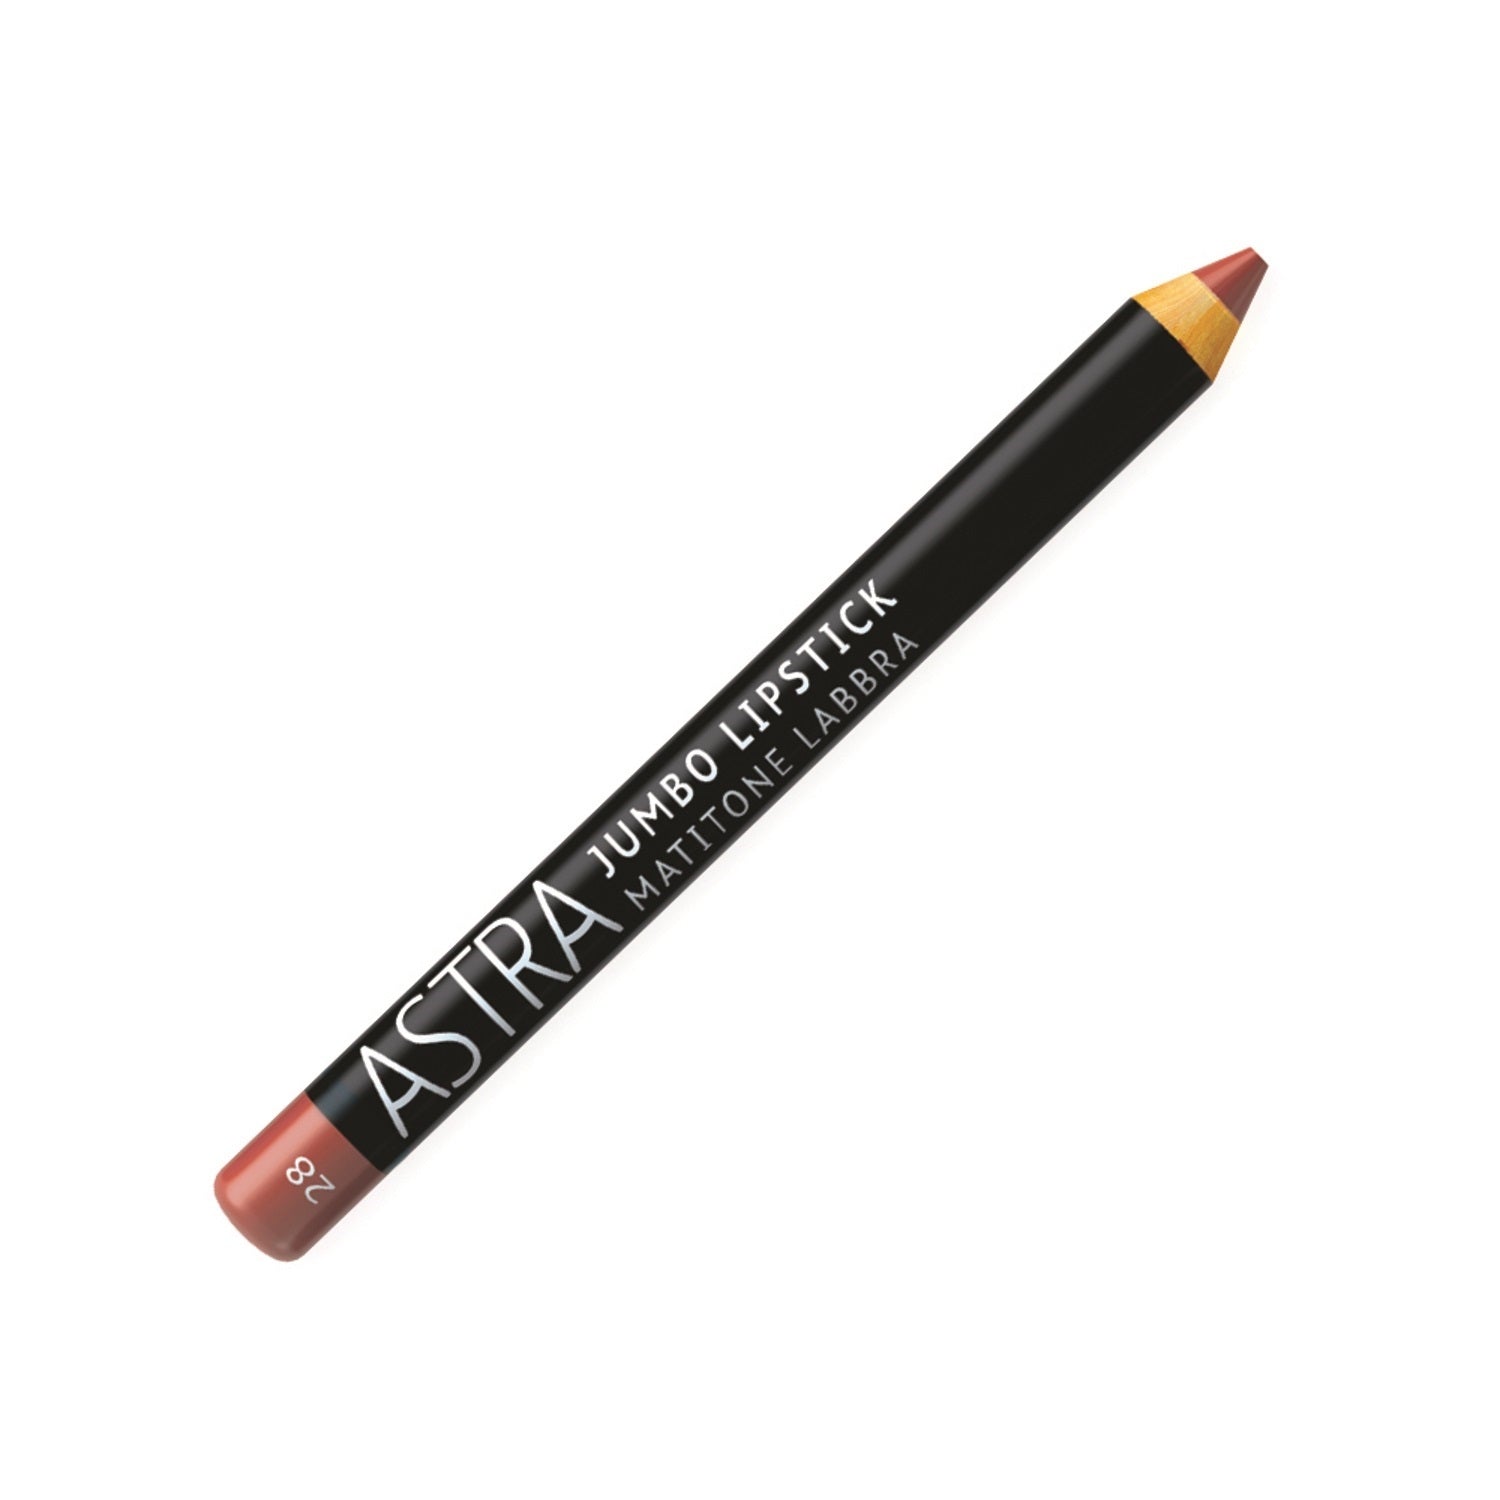 astra makeup jumbo lipstick matitone labbra 3g matitone labbra 0028 - nude nectar donna